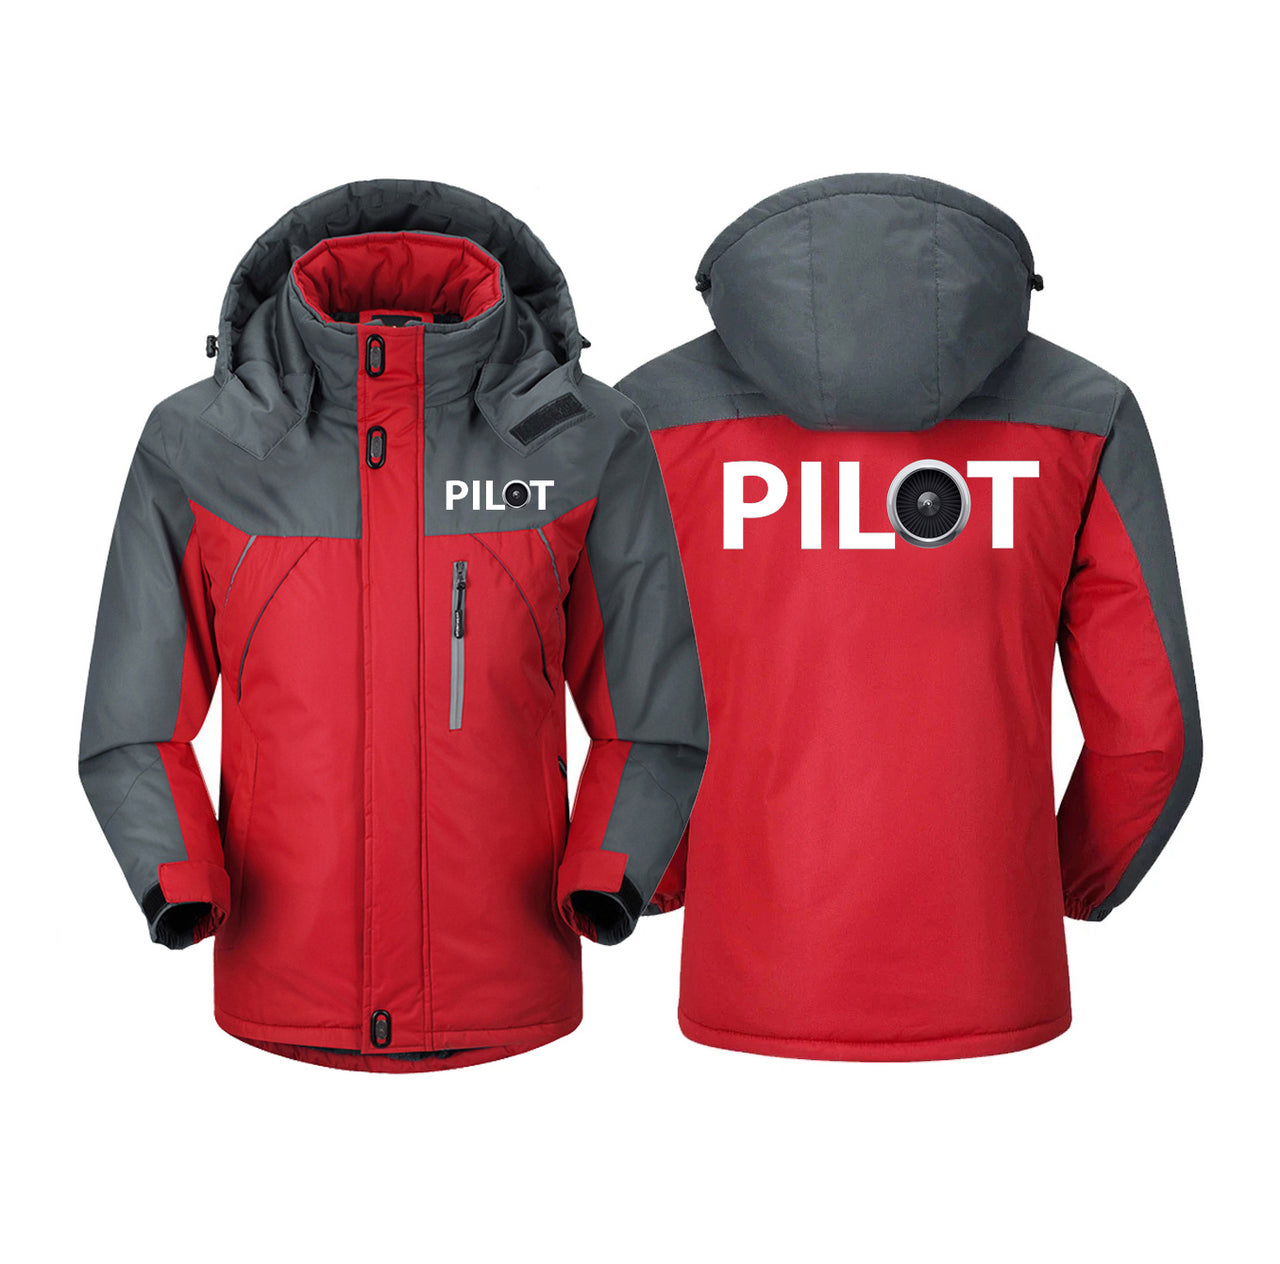 Pilot & Jet Engine Designed Thick Winter Jackets